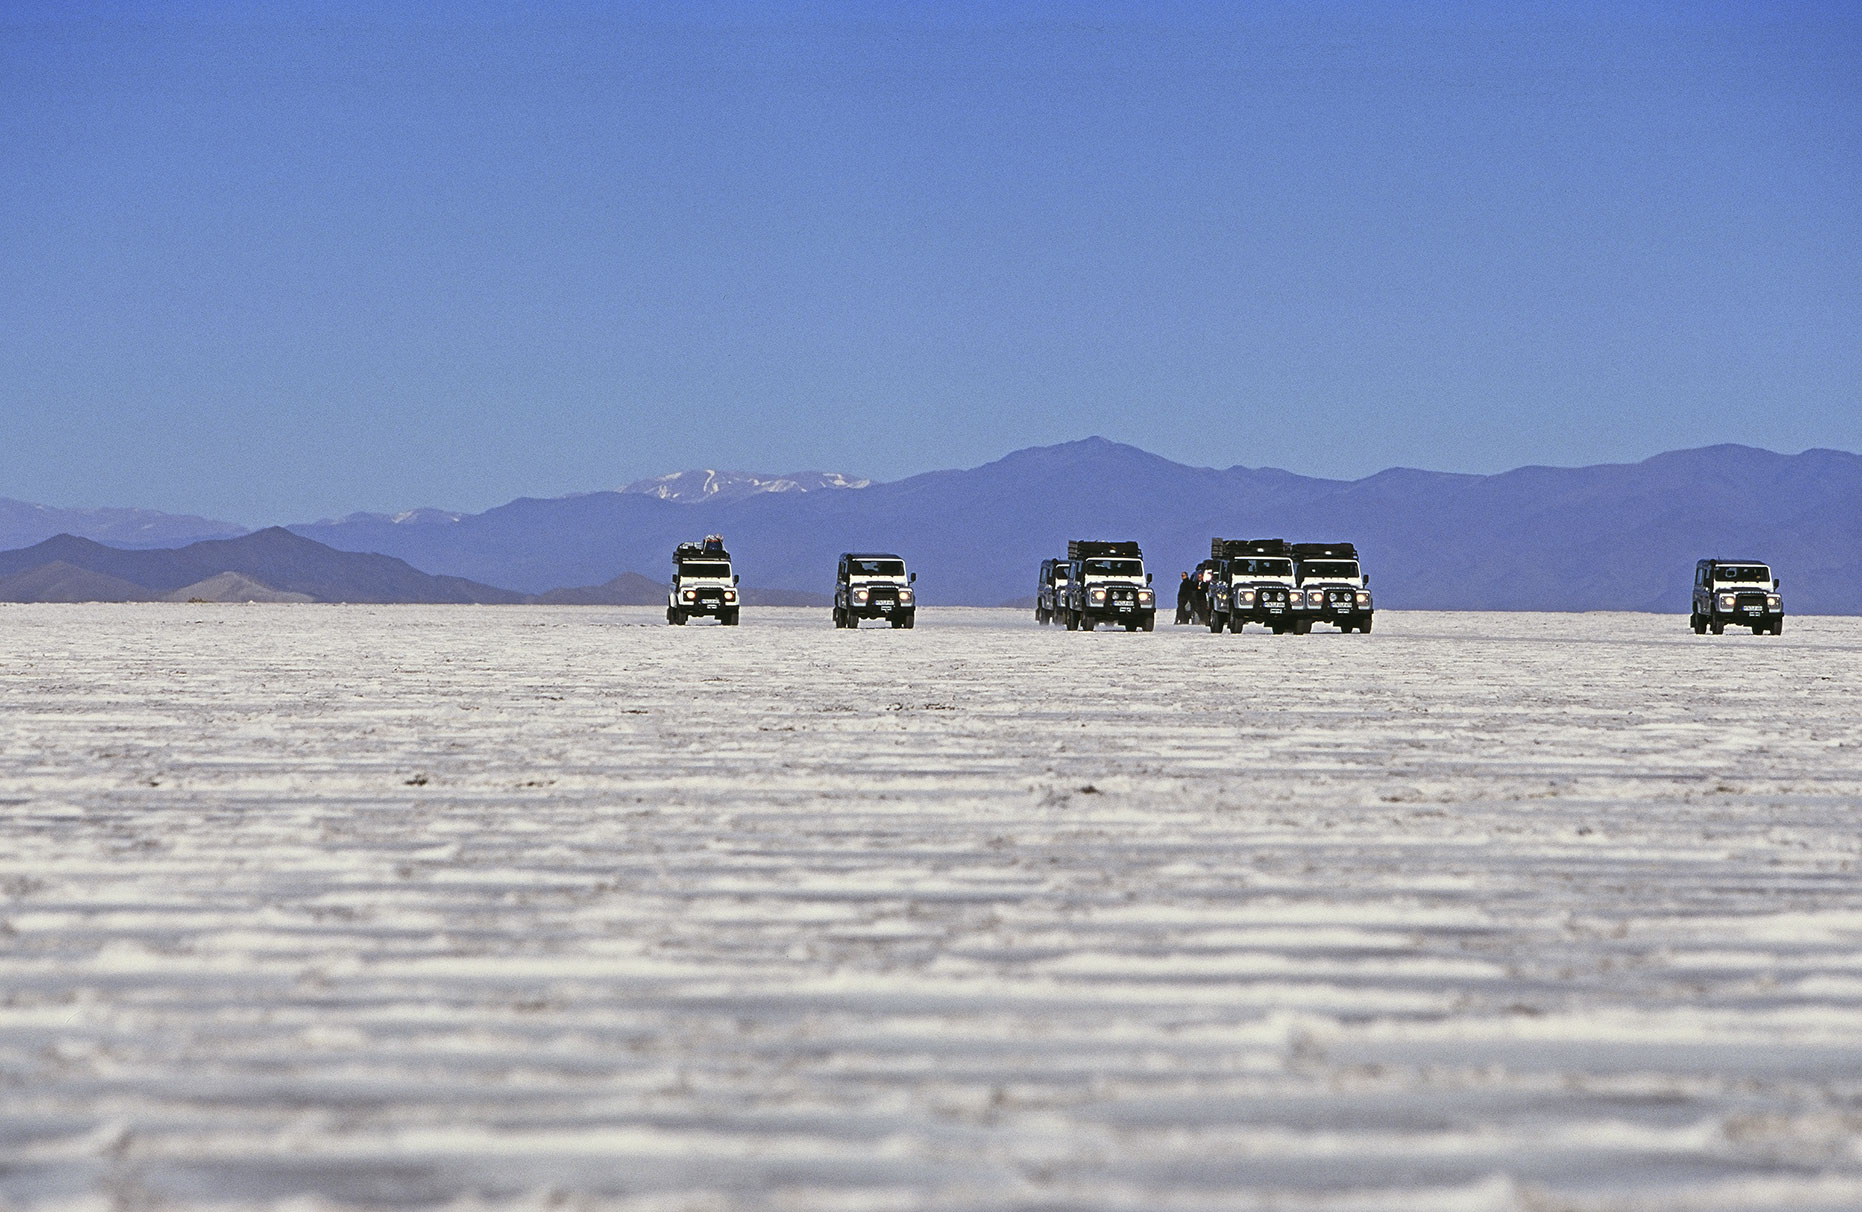 © Dirk Mathesius, Argentinia, Land Rover Experience Tour, MensHealth Magazin, Hasselblad 501c positive film